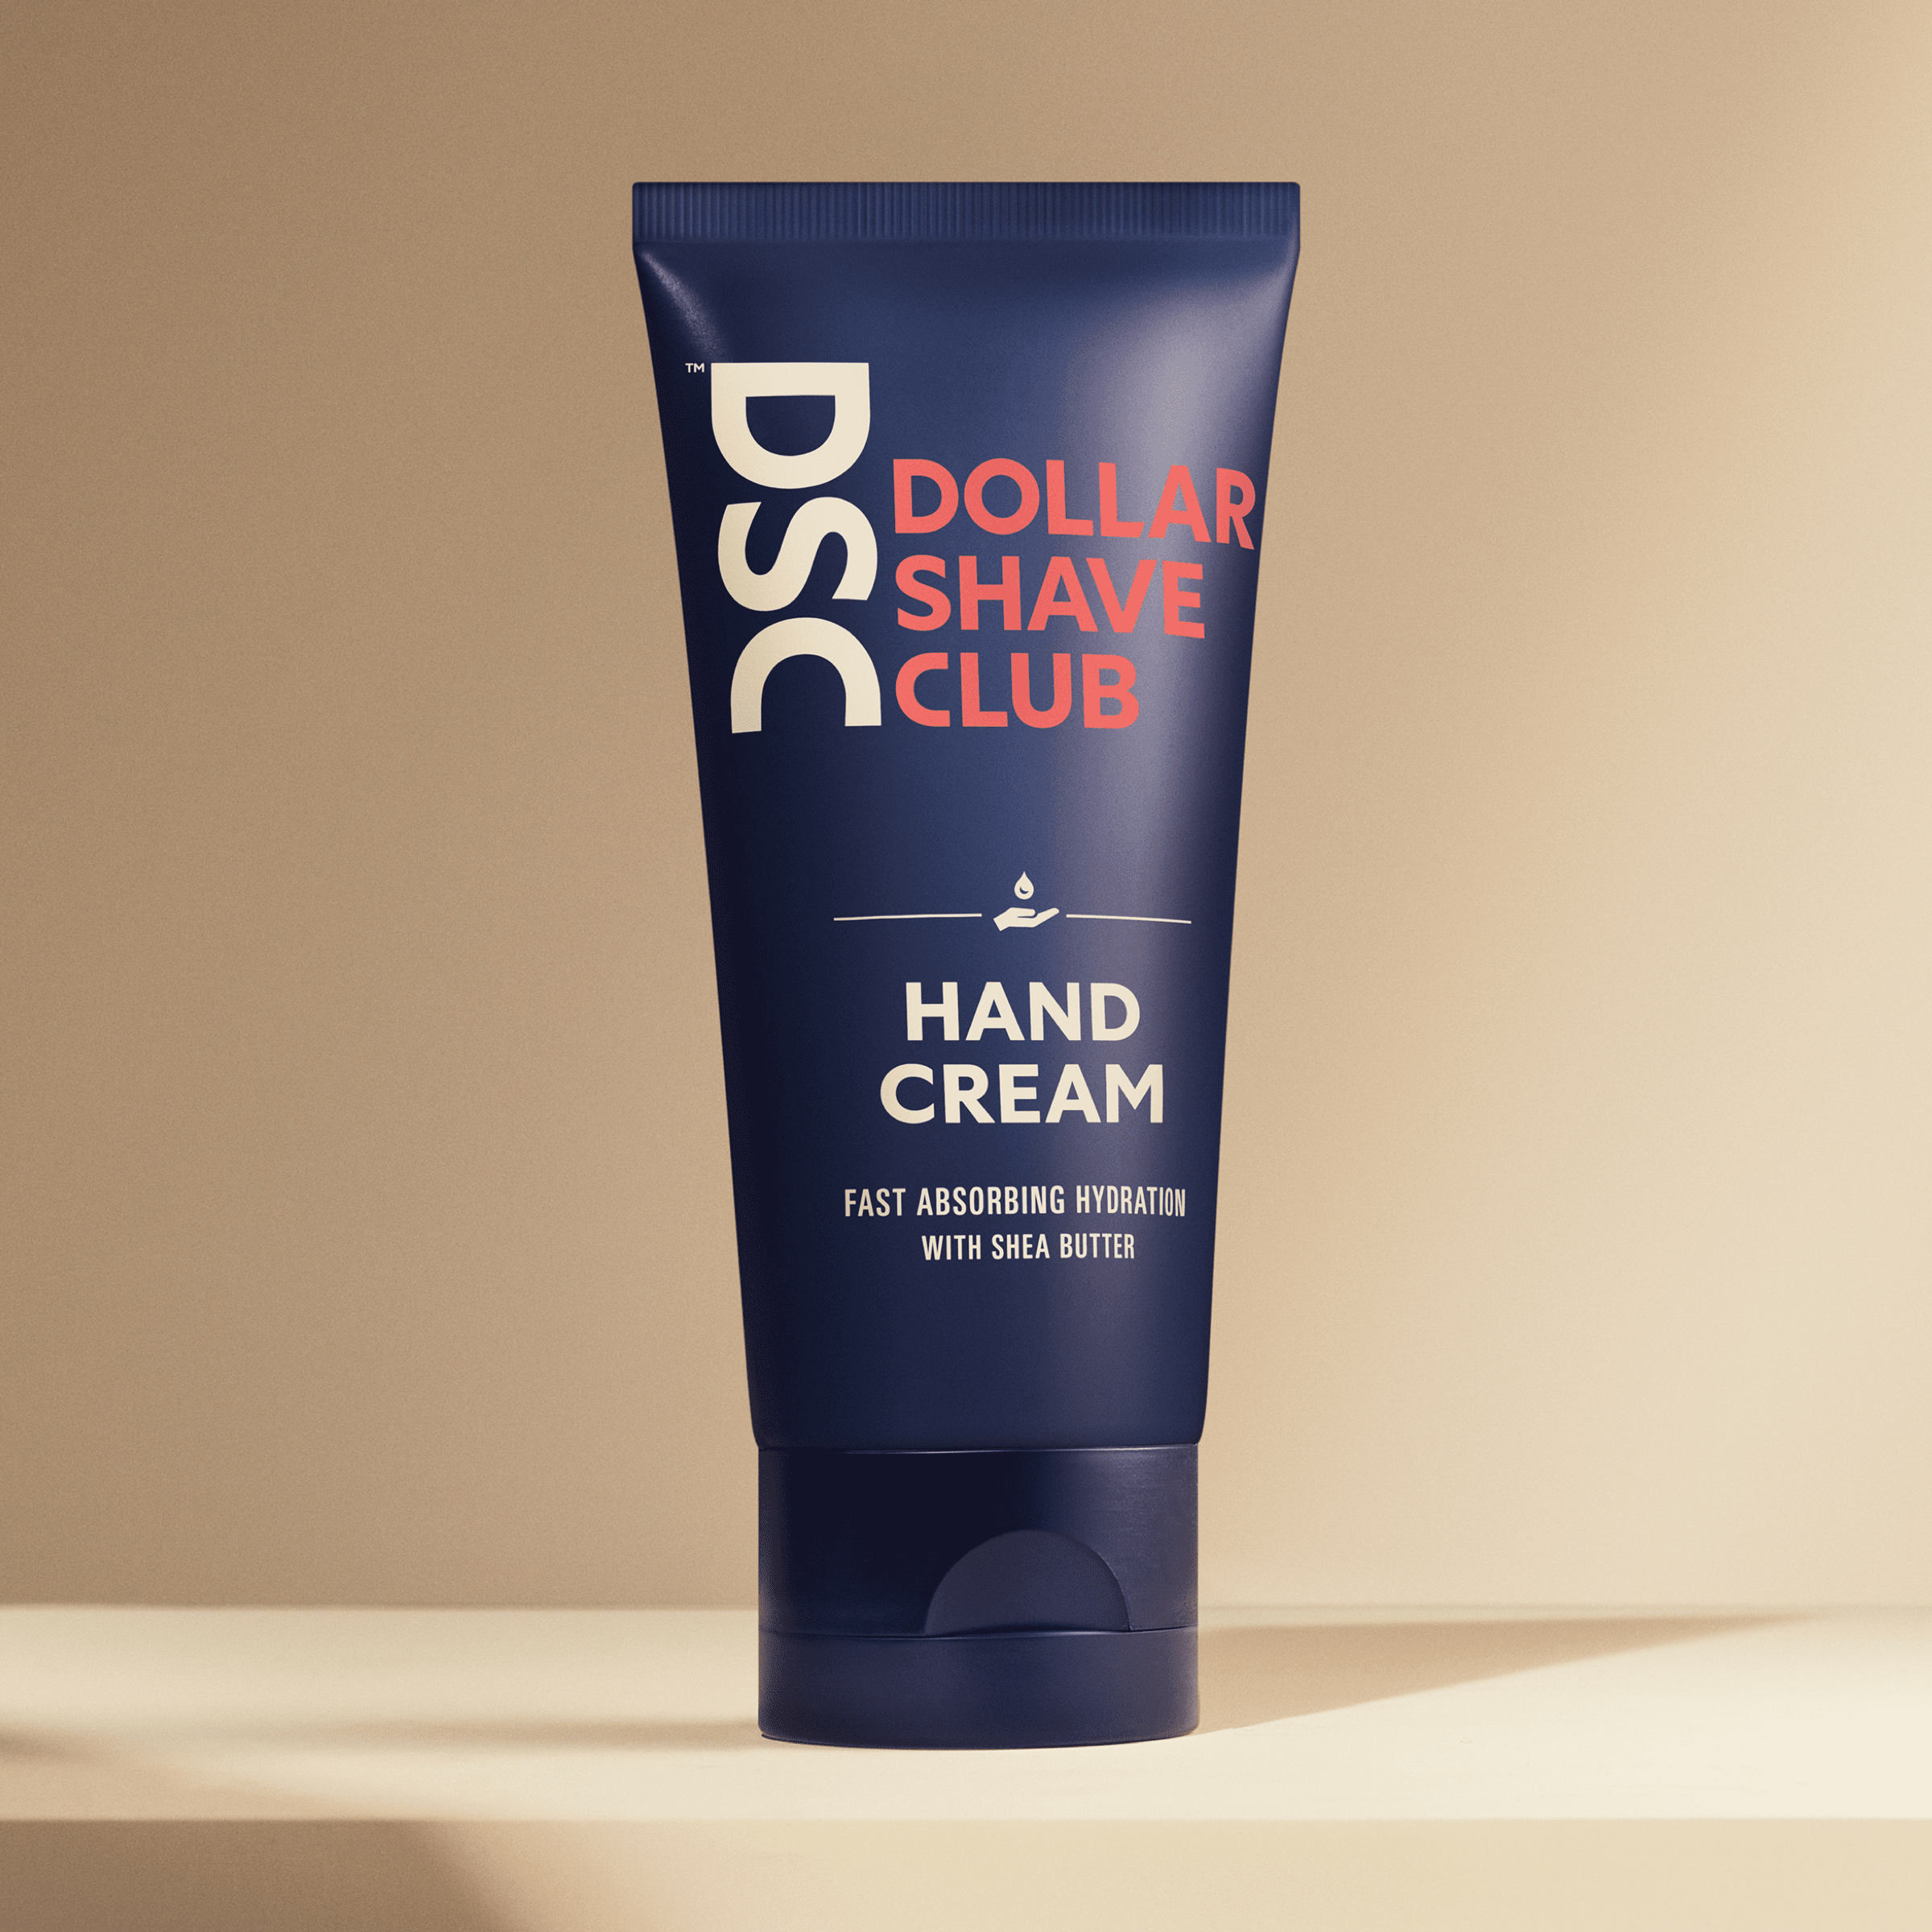 Dollar Shave Club Hand Cream against tan backdrop.